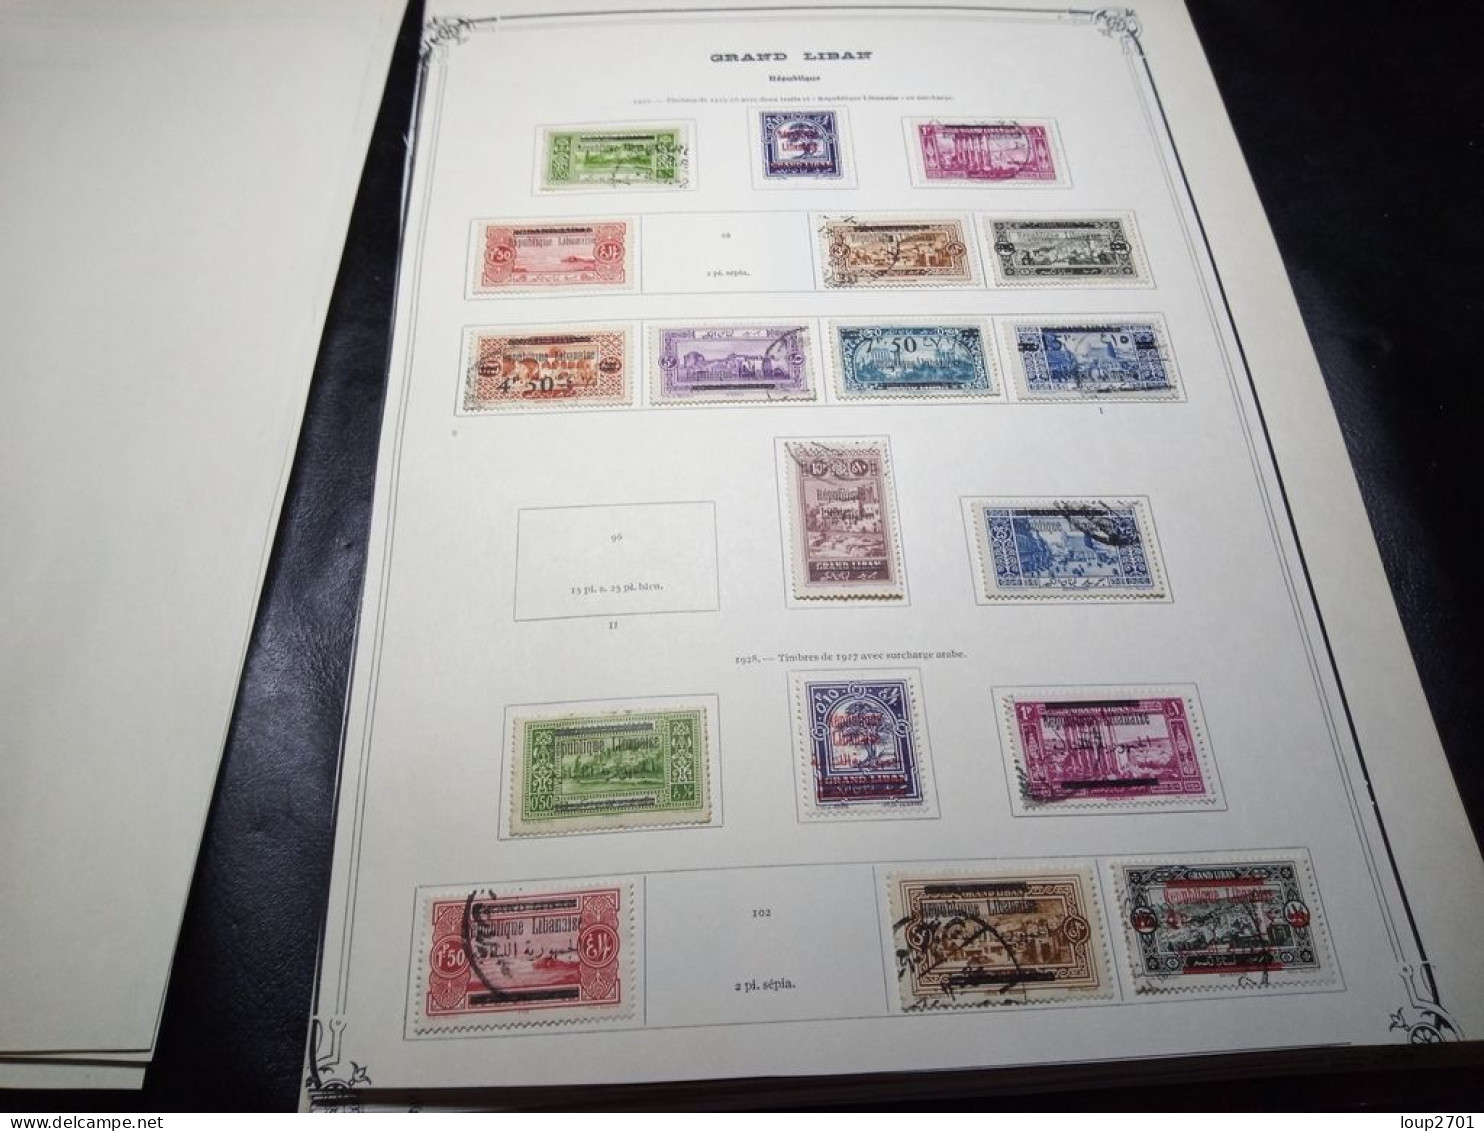 DM959 GROS LOT FEUILLES GRAND LIBAN / LIBAN N / O A TRIER COTE++ DEPART 10€ - Collections (en Albums)